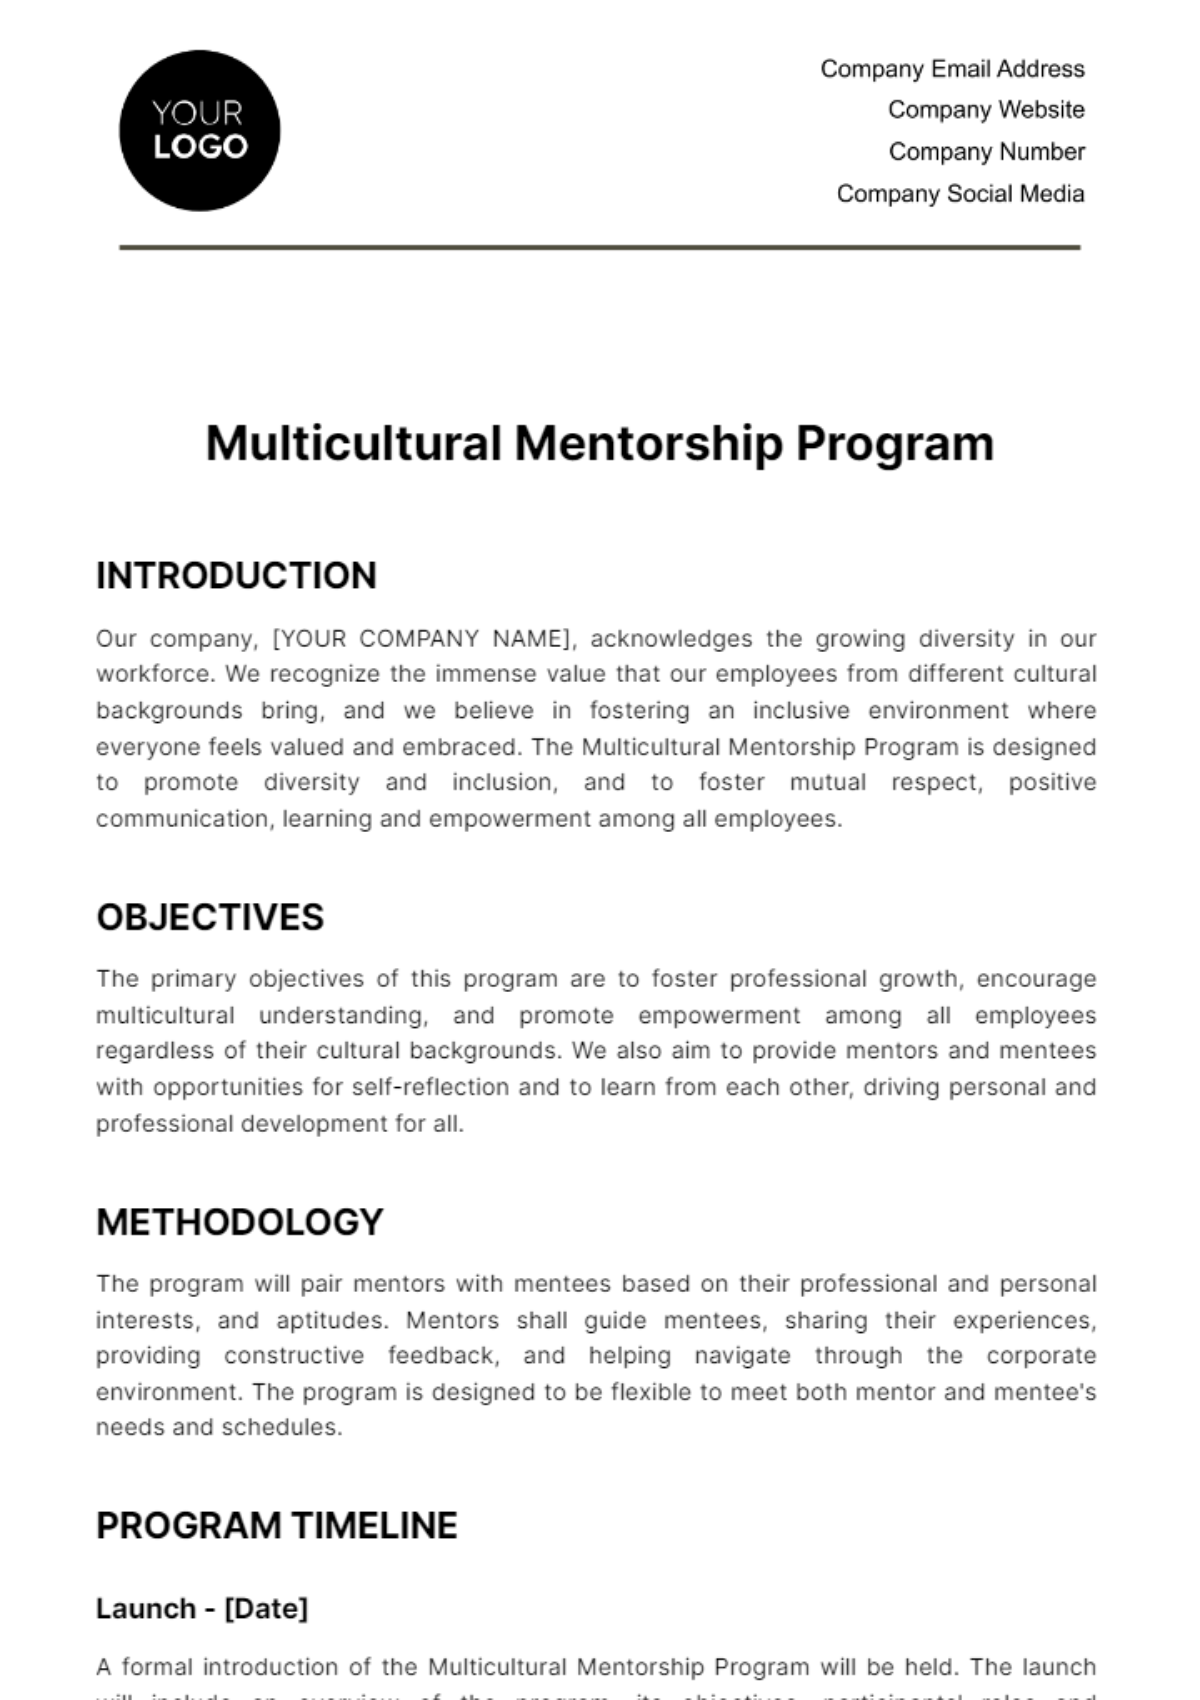 Free Multicultural Mentorship Program HR Template